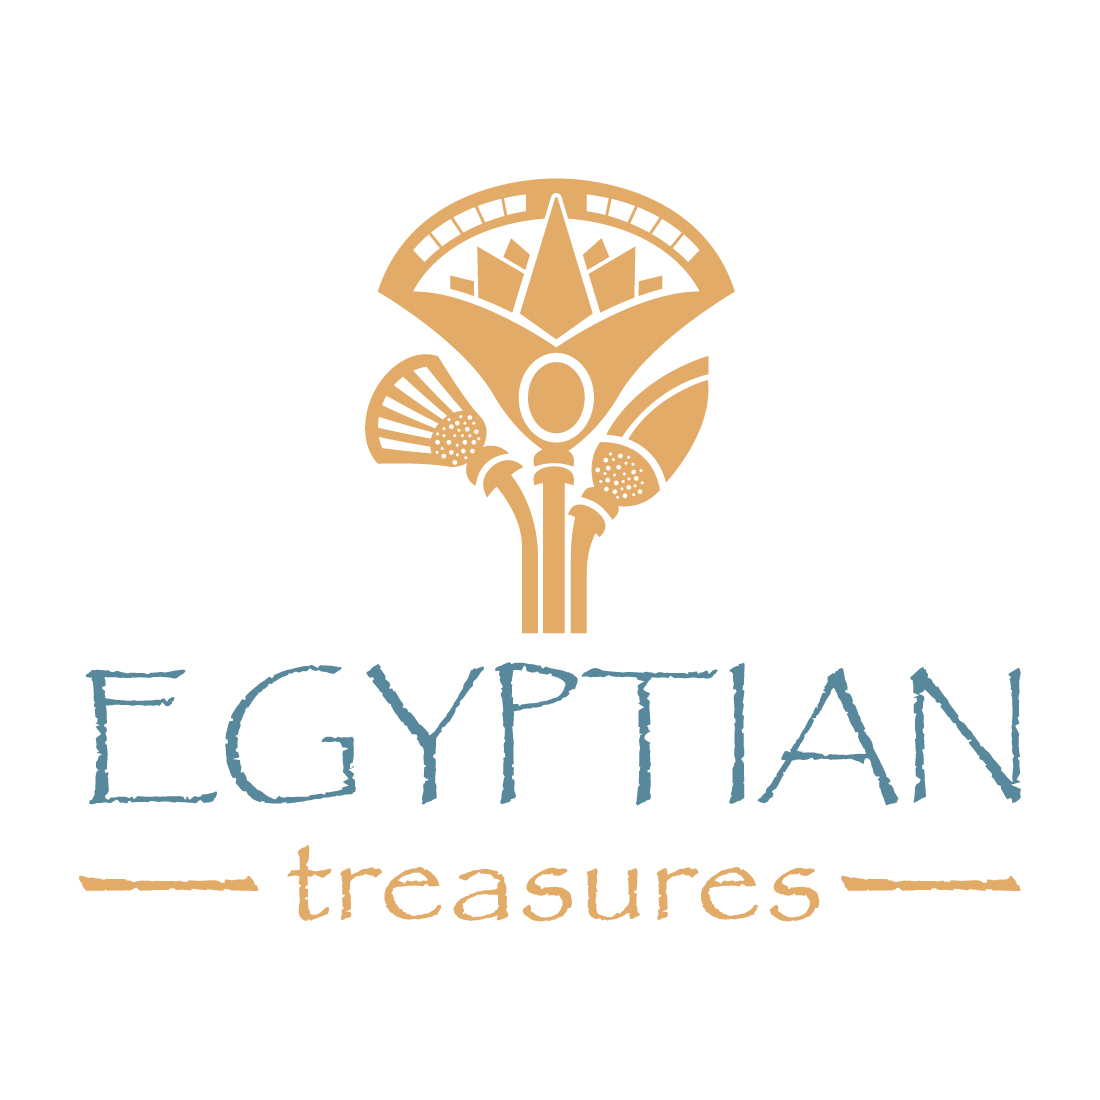 Egyptian treasures icon logo cover image.